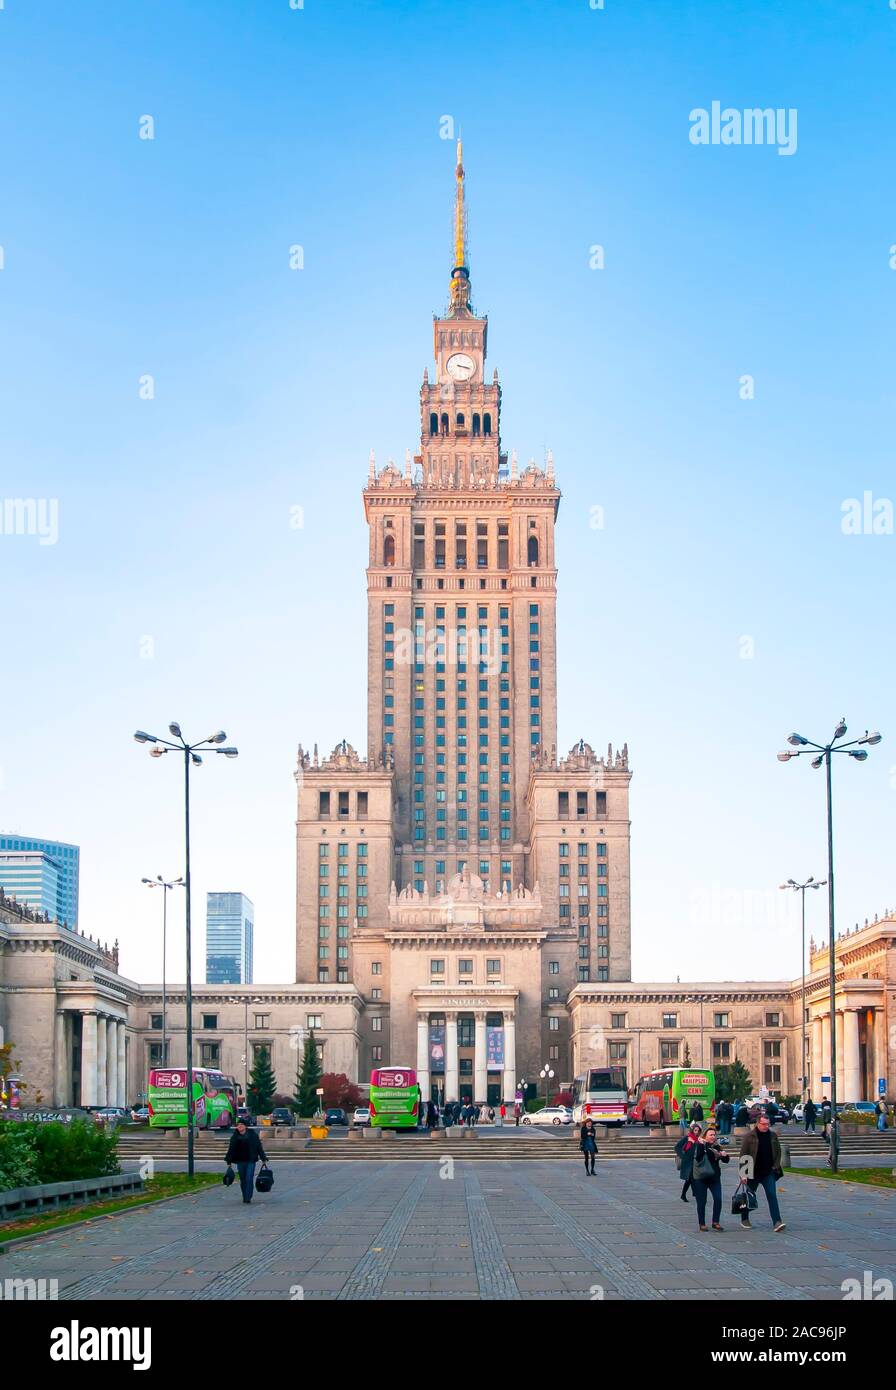 Palace of culture and science (Palac kultury i nauki)  Warsaw, Poland, Stock Photo